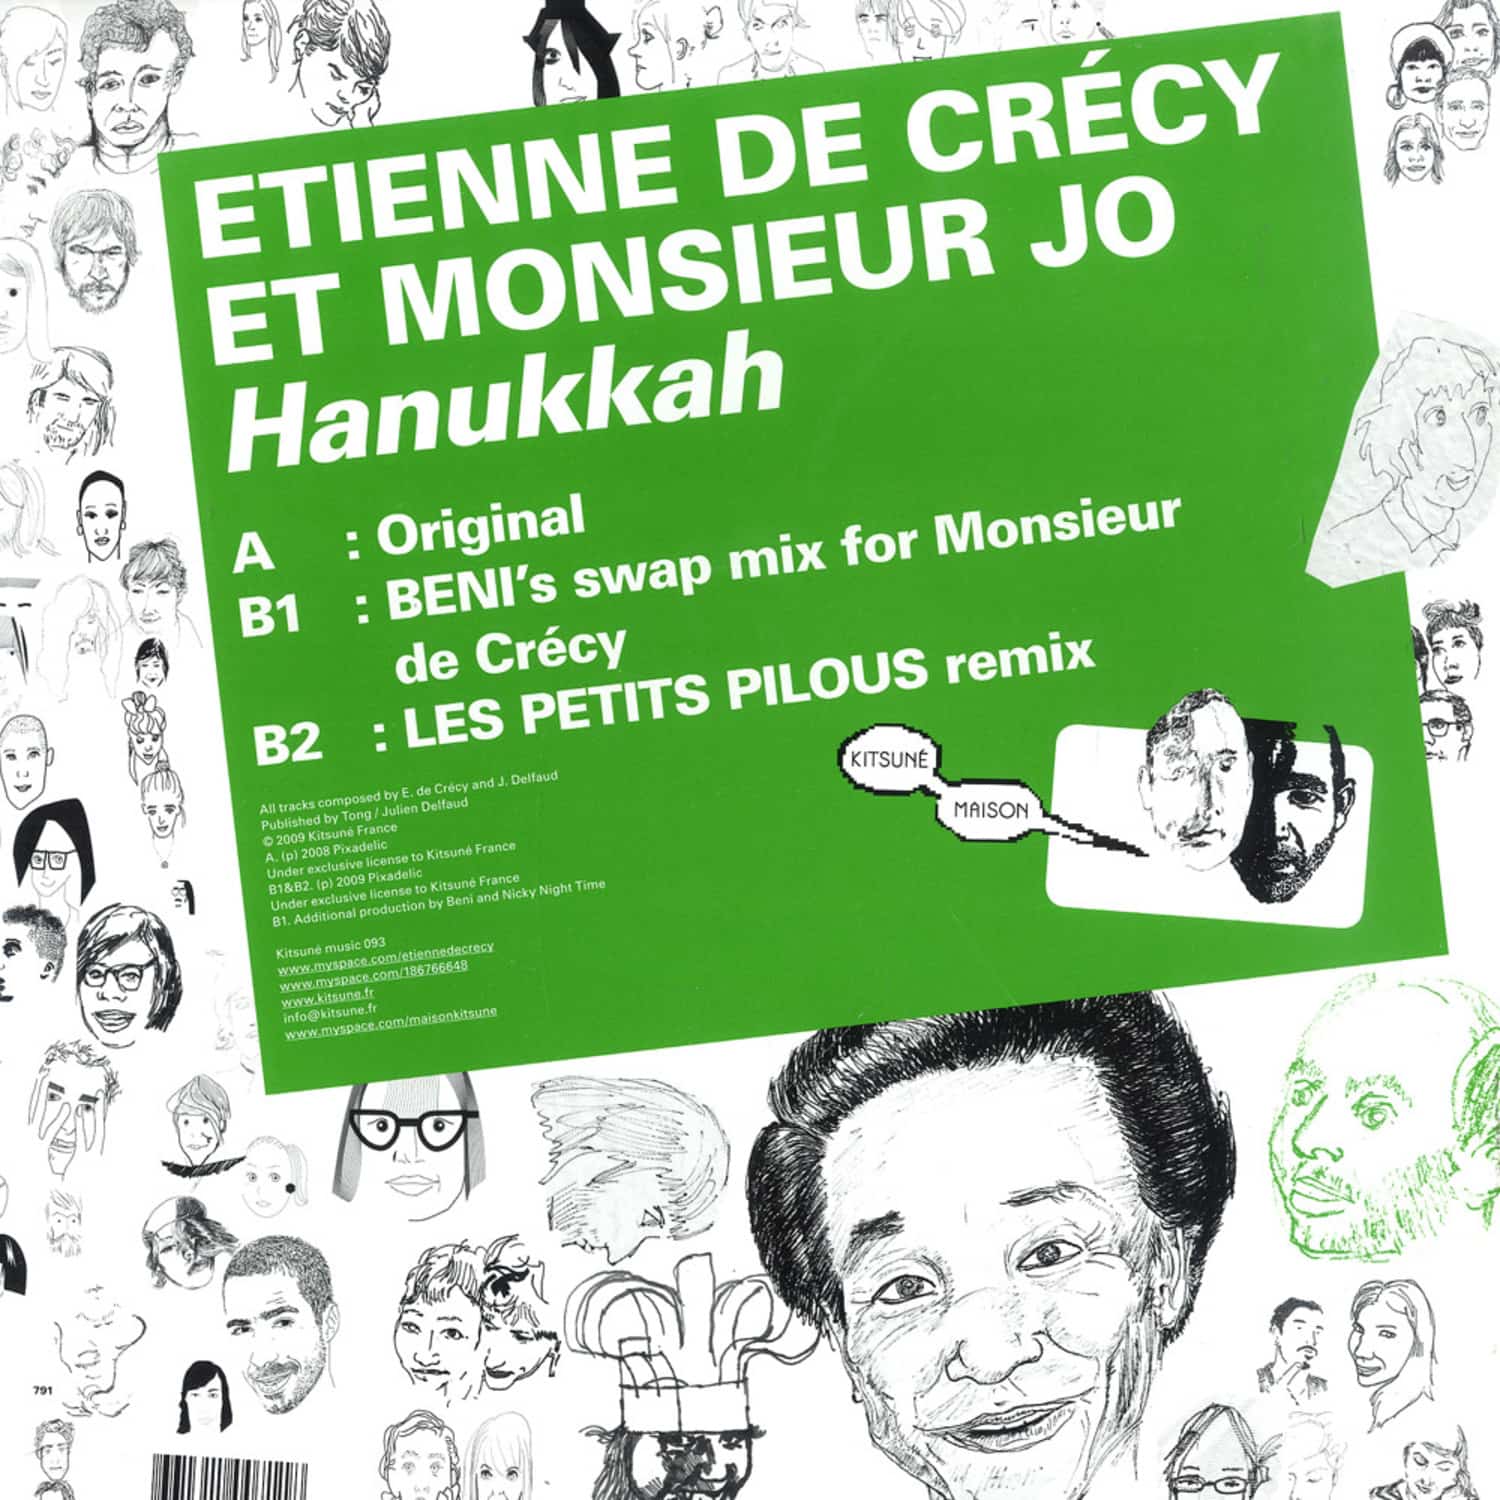 Etienne De Crecy At Monsieur Jo - HANUKKAH